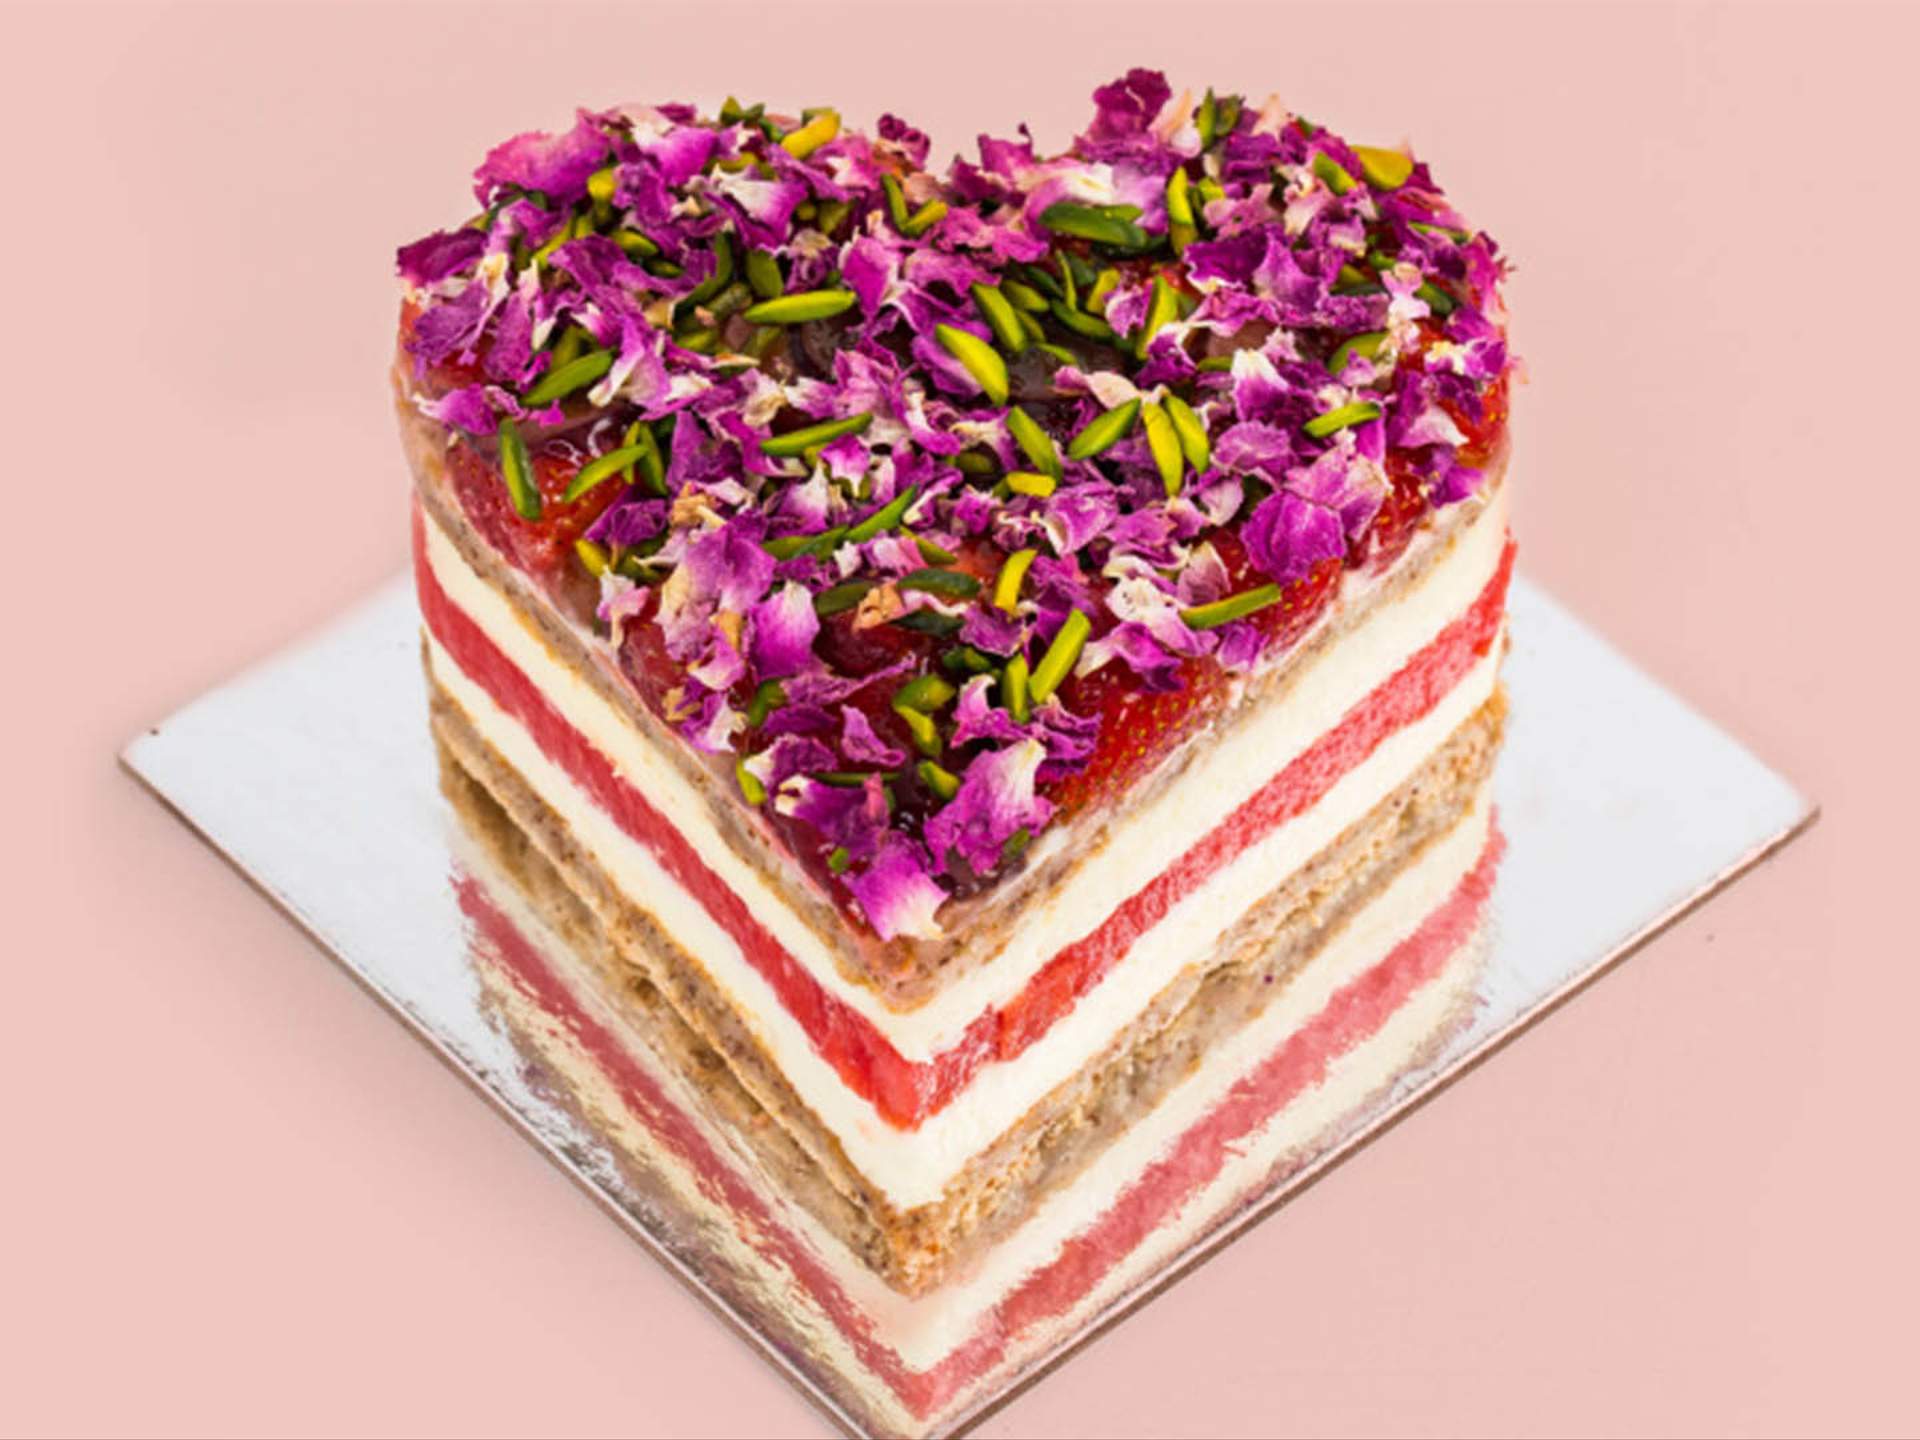 Vegan Strawberry Cake - Rainbow Nourishments